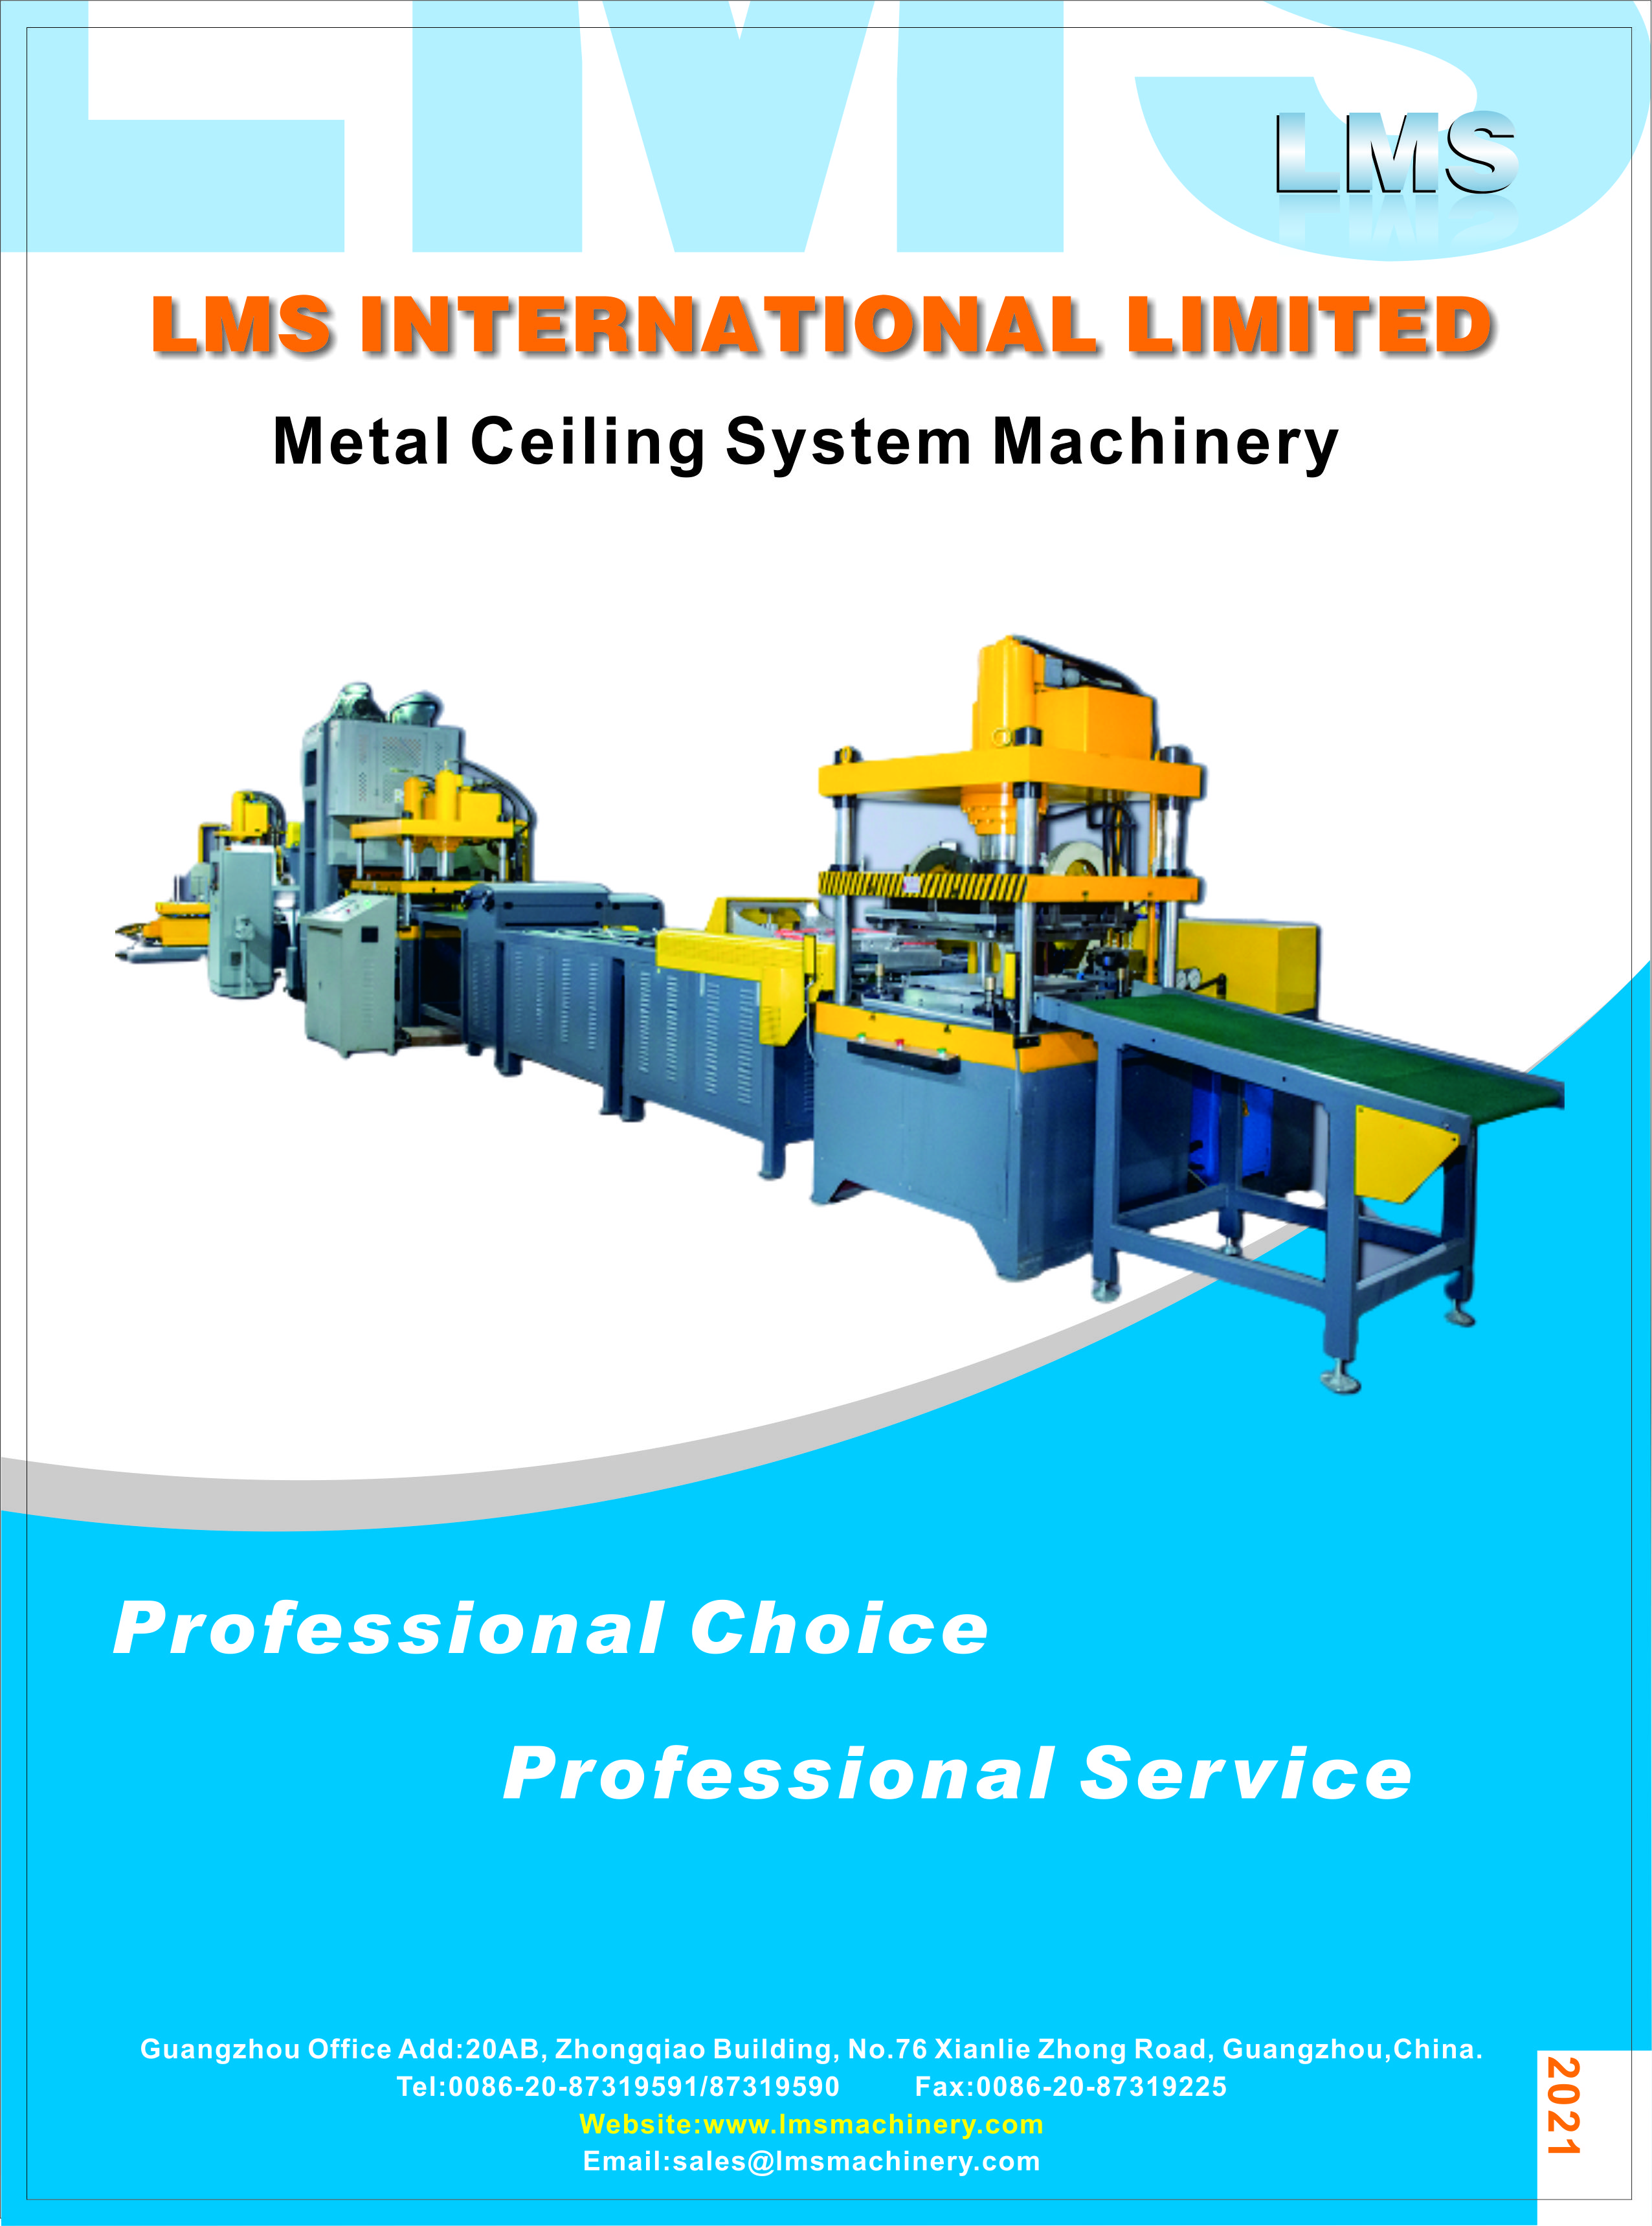 LMS Ceiling Machine Catalogue